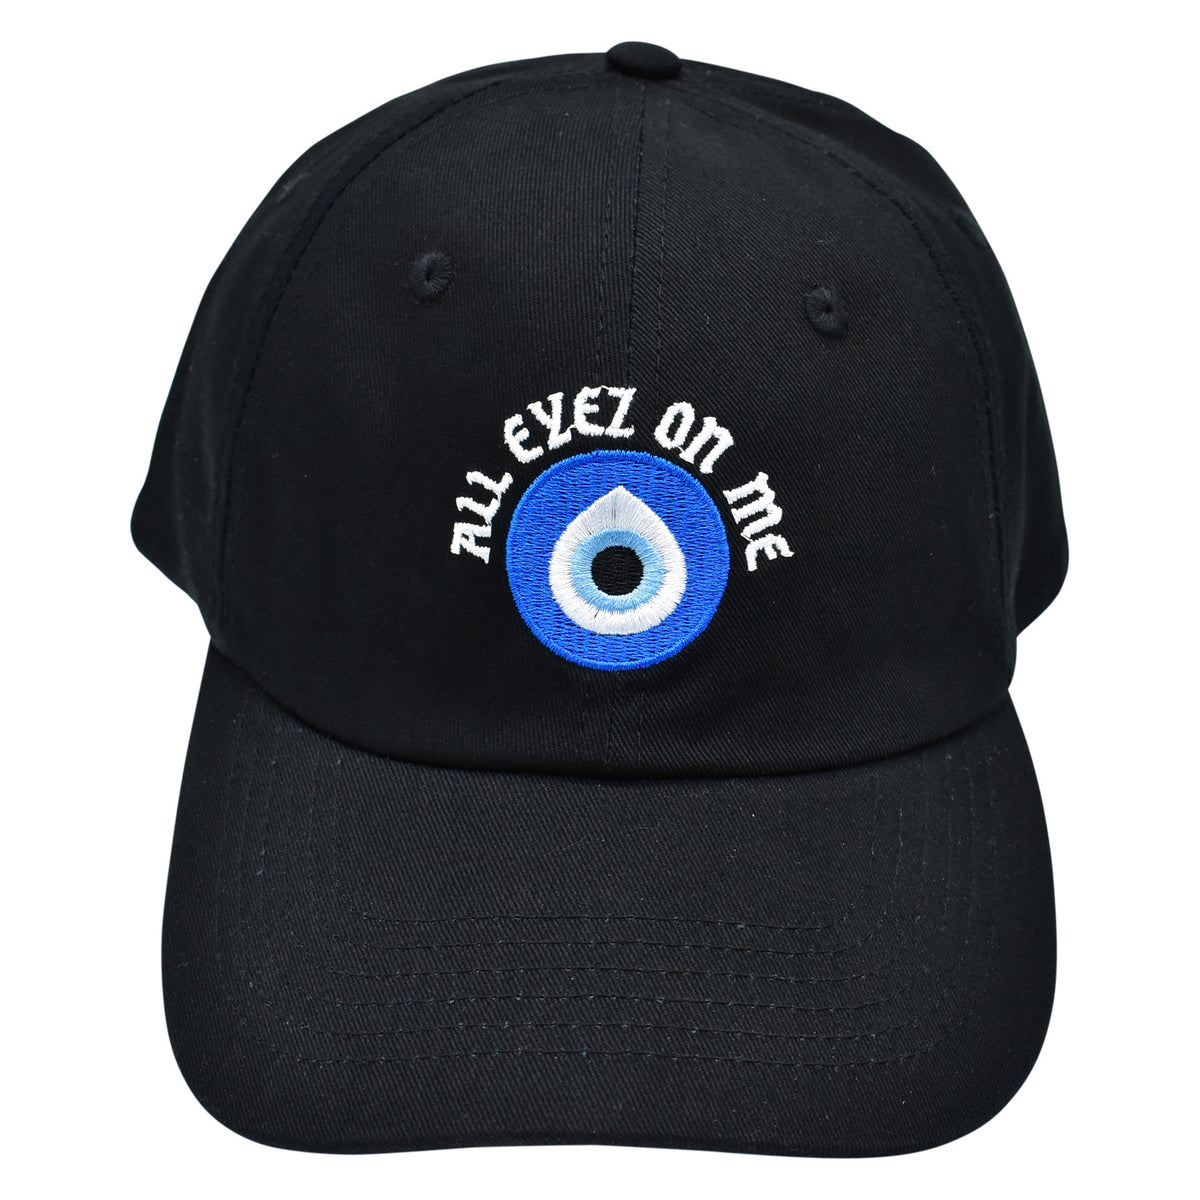 All Eyez on Me Evil Eye Embroidered Cap